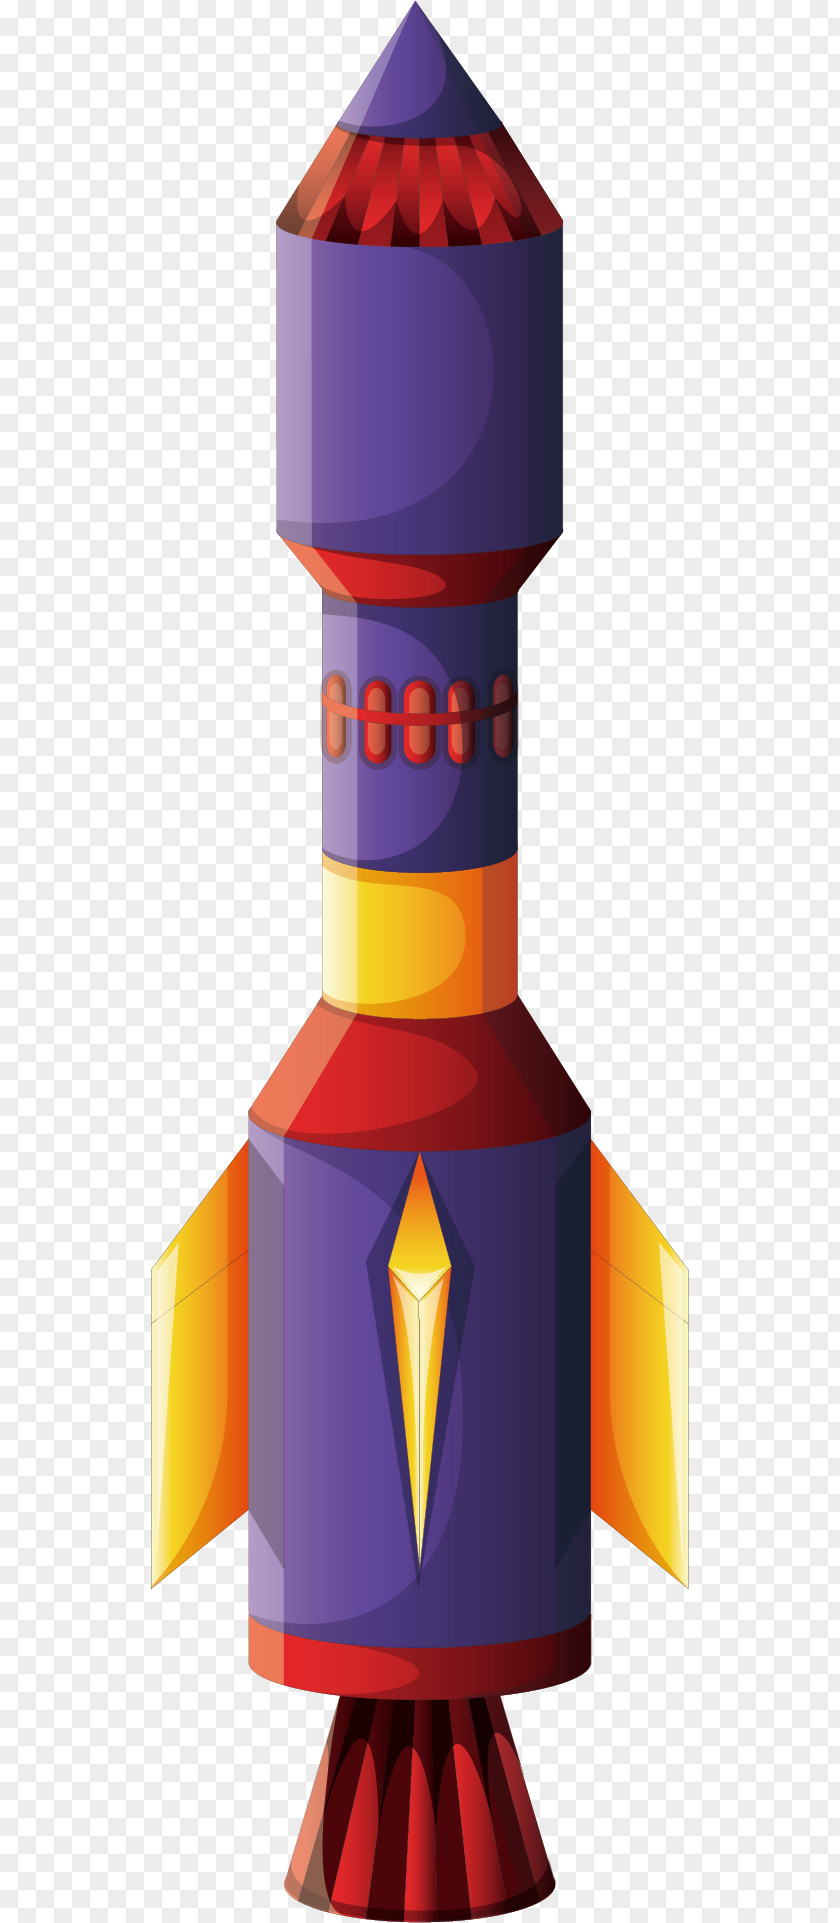 Erecting Rocket Spacecraft Illustration PNG